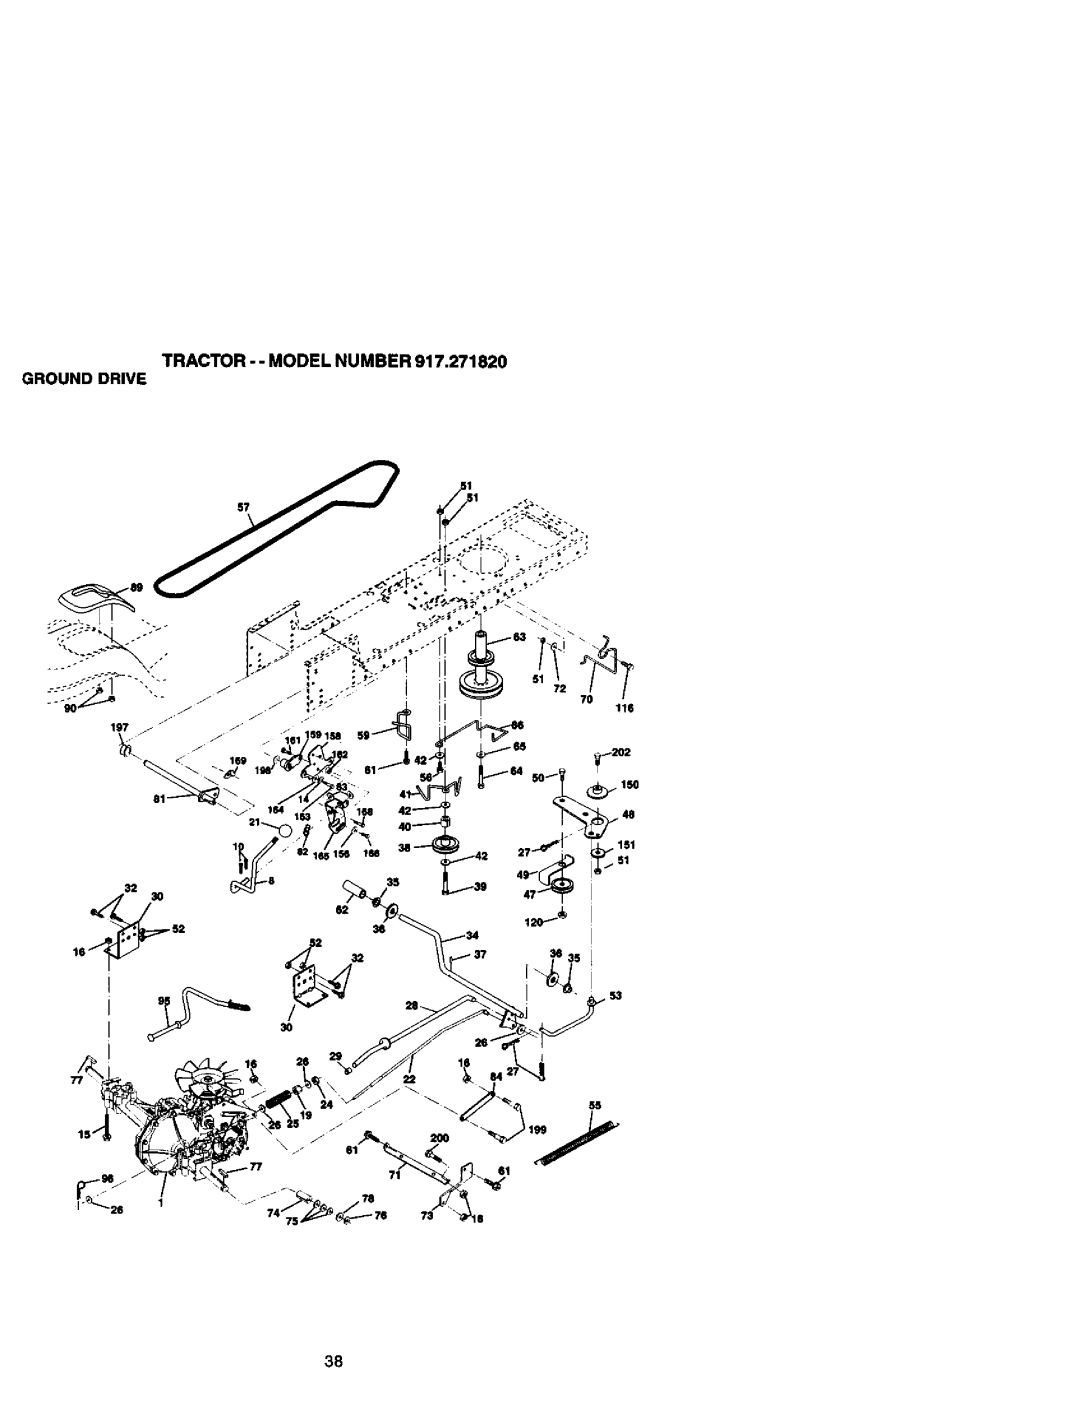 Craftsman manual GROUNDDRIVETRACTOR- MODELNUMBER917.271820 